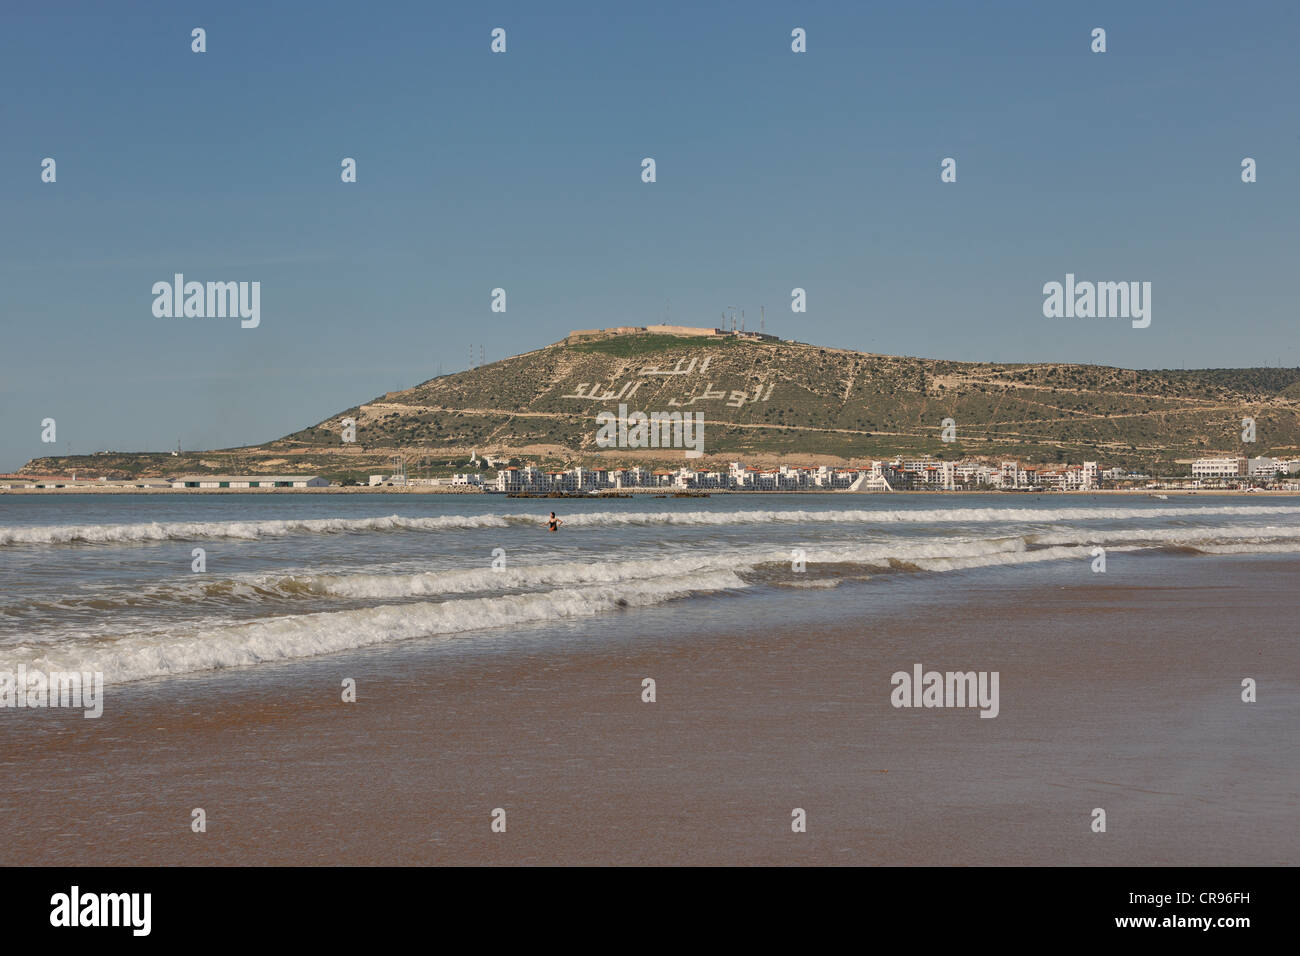 Strand von Agadir, Hügel mit Worten, Allah, al-Watan al-Malik, d.h. Allah, der Heimat, der König, Marokko, Afrika Stockfoto